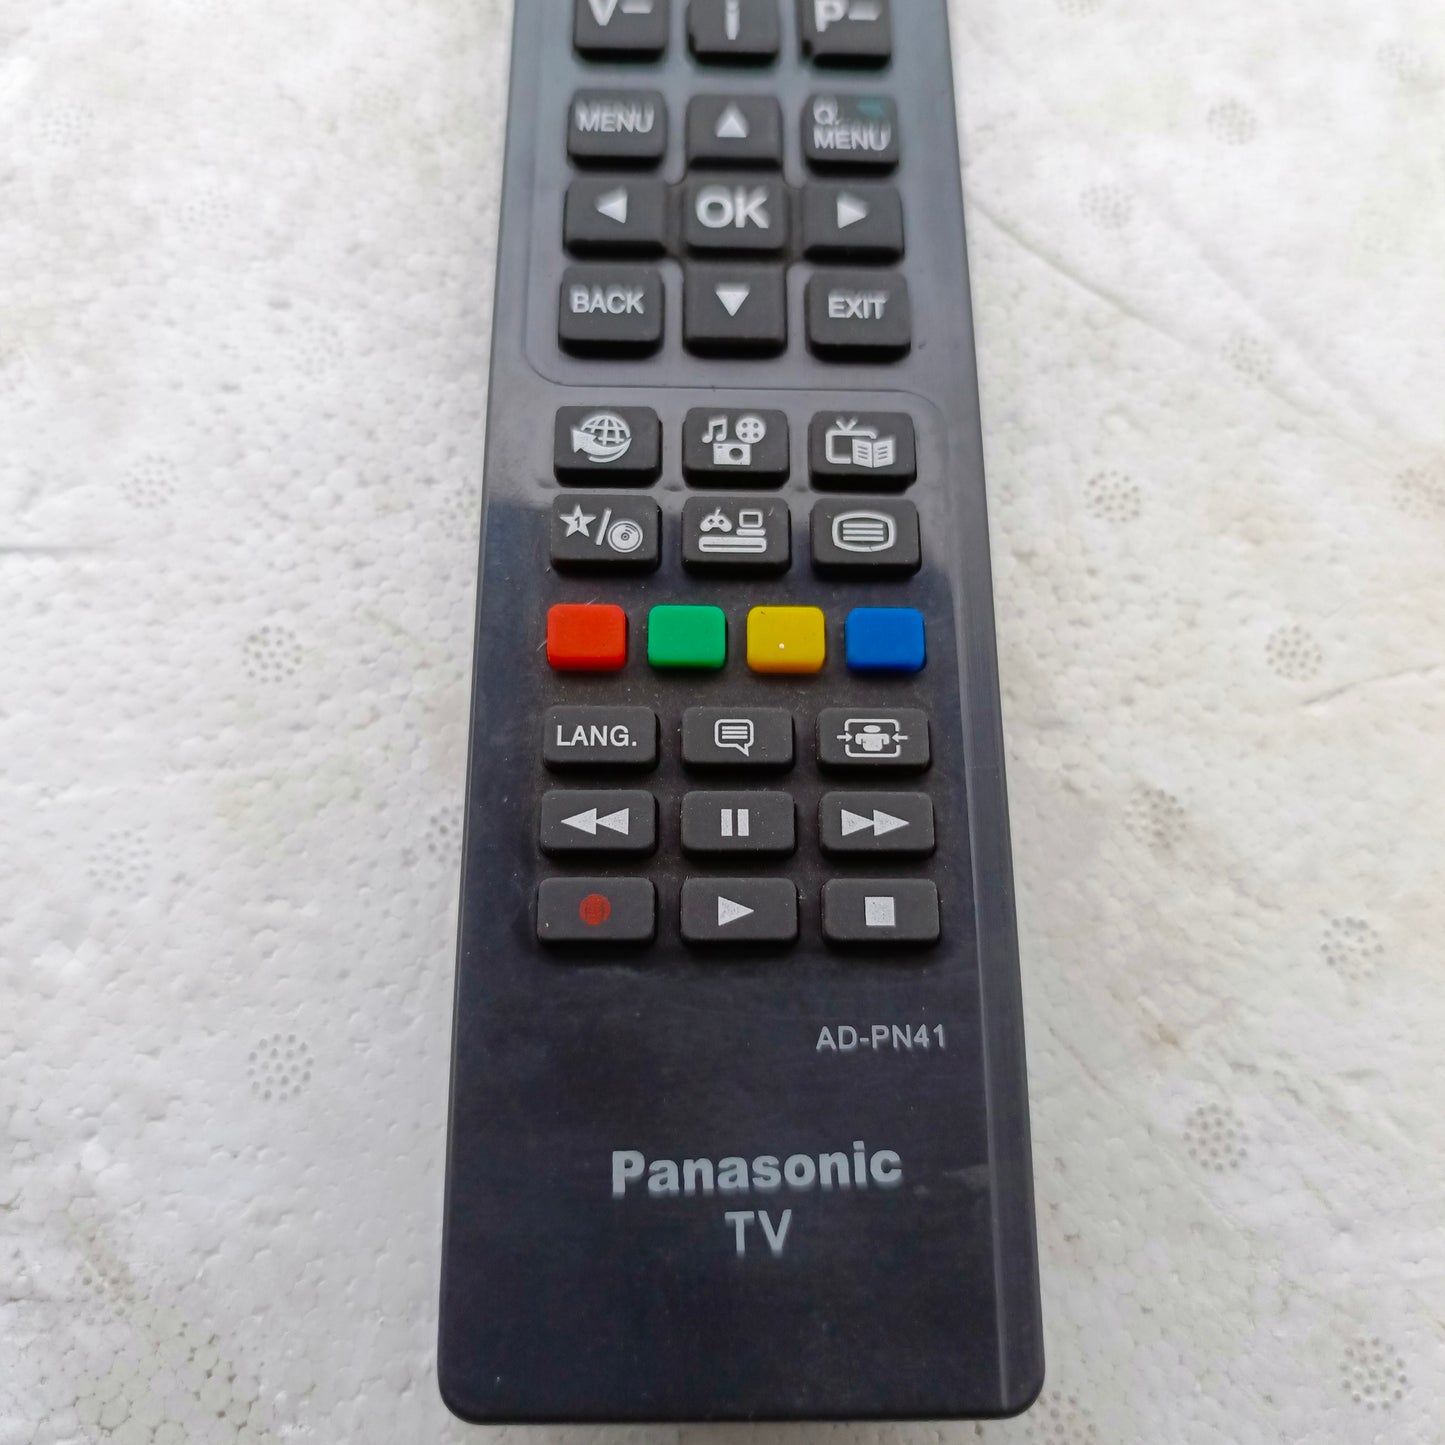 Panasonic AD-PN41 Smart TV Remote Control - Brand New